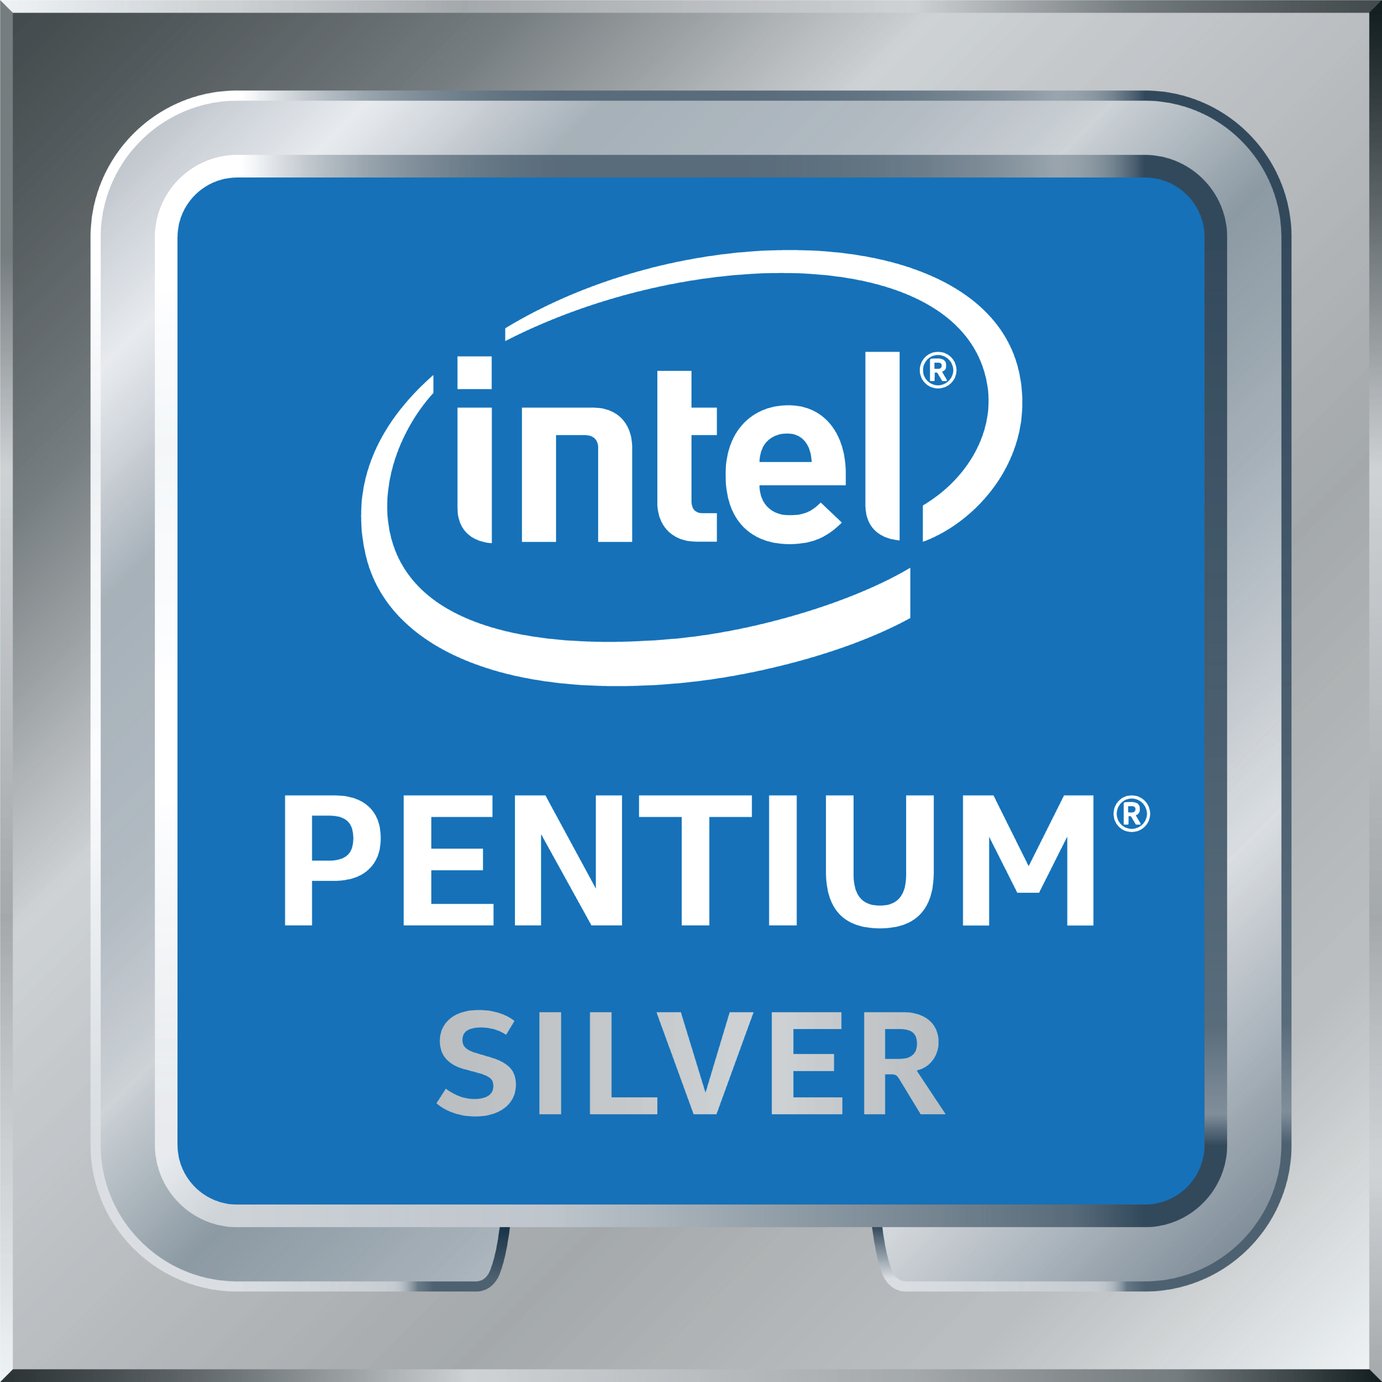 HP x360 14in Pentium Silver 4GB 64GB FHD Chromebook Review